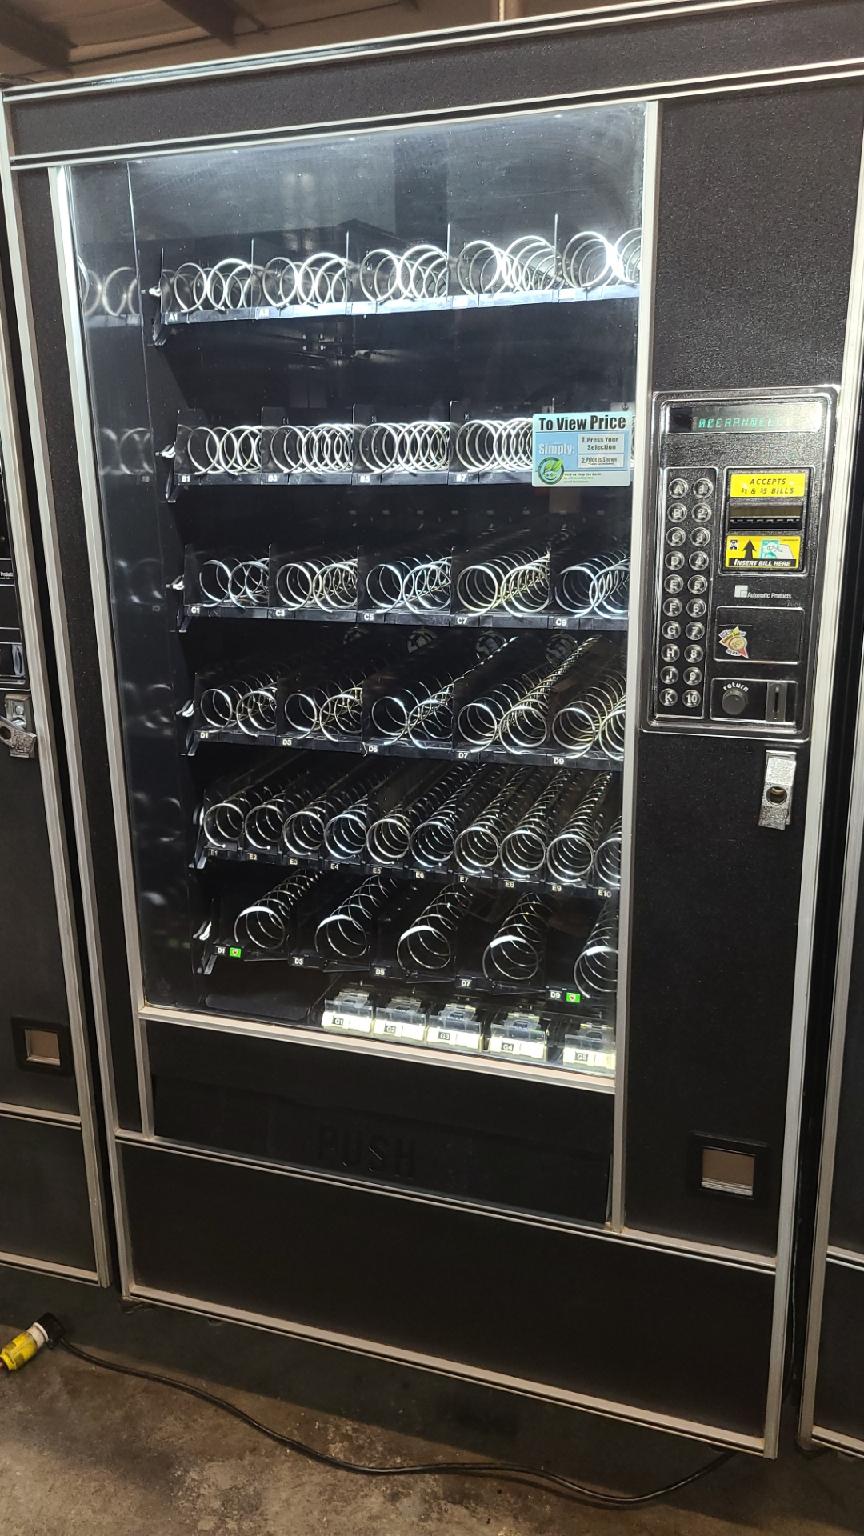 HRI Vending Machines